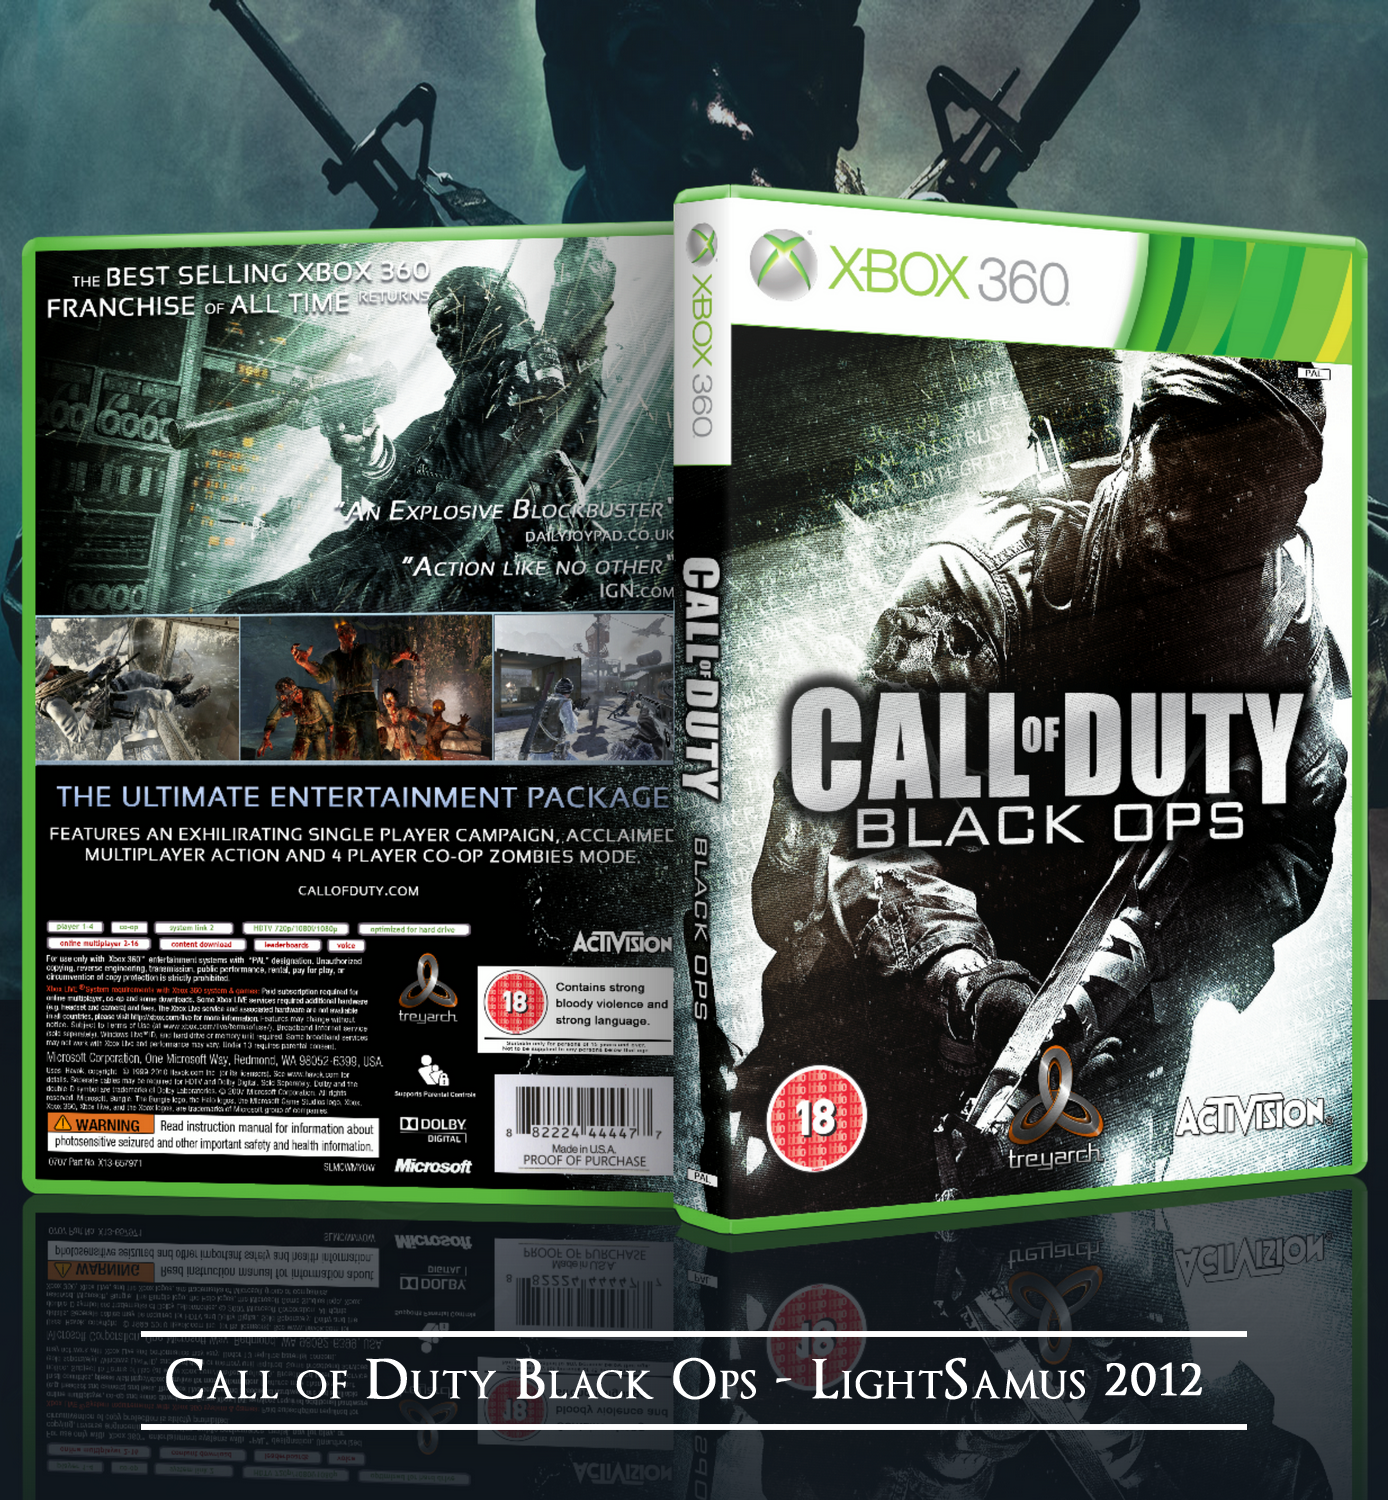 Call of duty xbox game. Black ops Xbox 360 обложка. Xbox 360 Black ops коробка. Call of Duty Black ops диск Xbox 360. Cod Black ops 2 обложка Xbox 360.